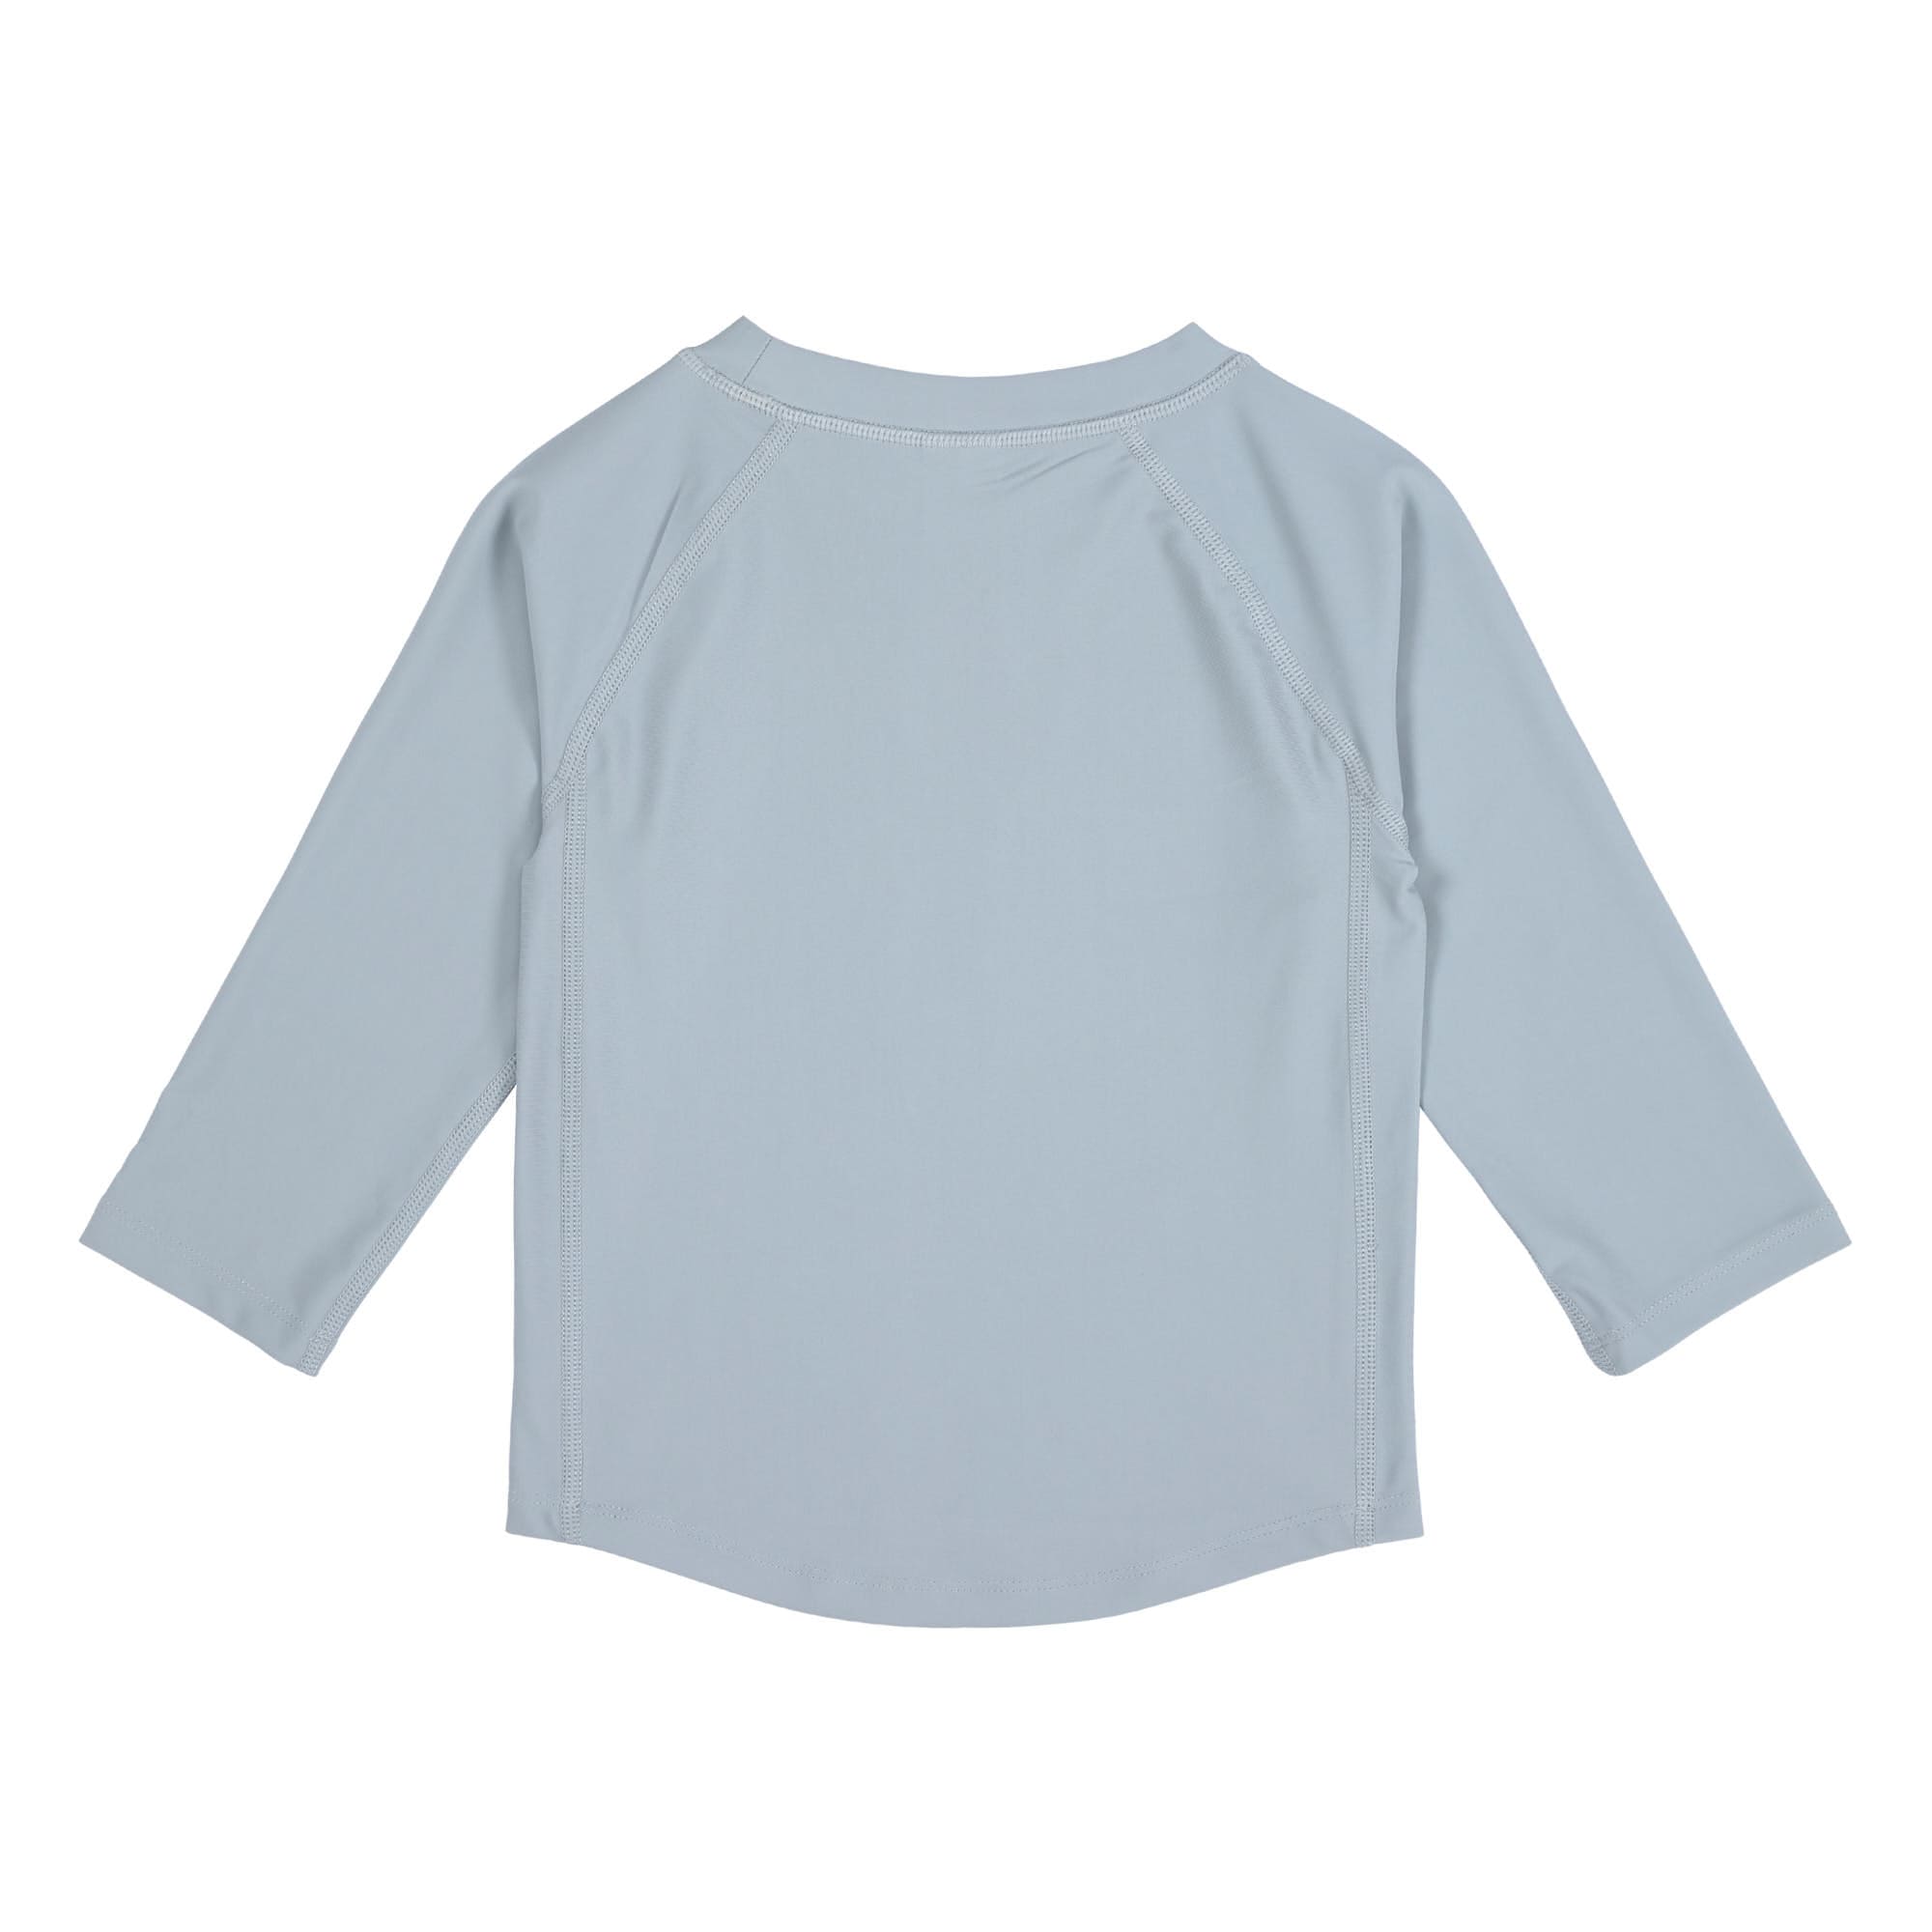 Lässig - Kinder Badeshirt langarm,  UV Shirt blau Languste - AURYN Shop